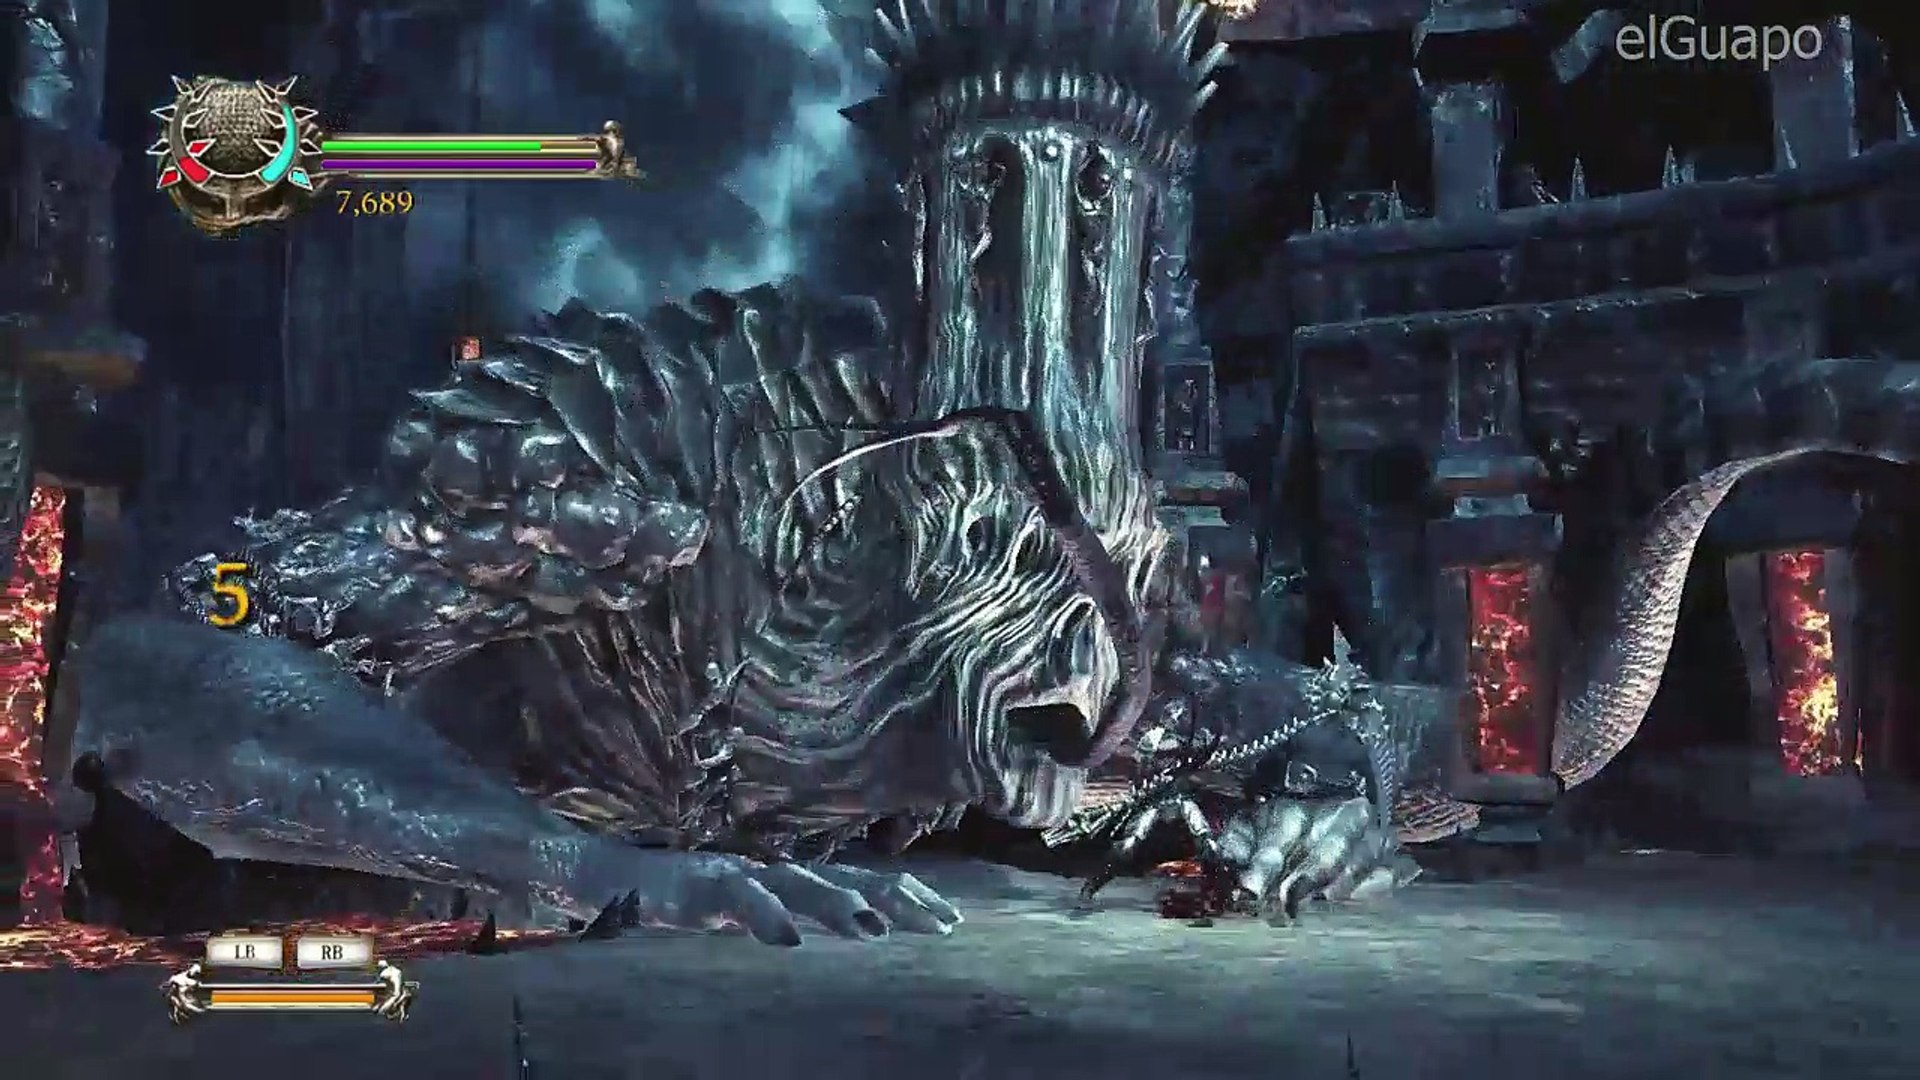 Dante's Inferno walkthrough part #15 - CITY OF DIS, PS3 gameplay